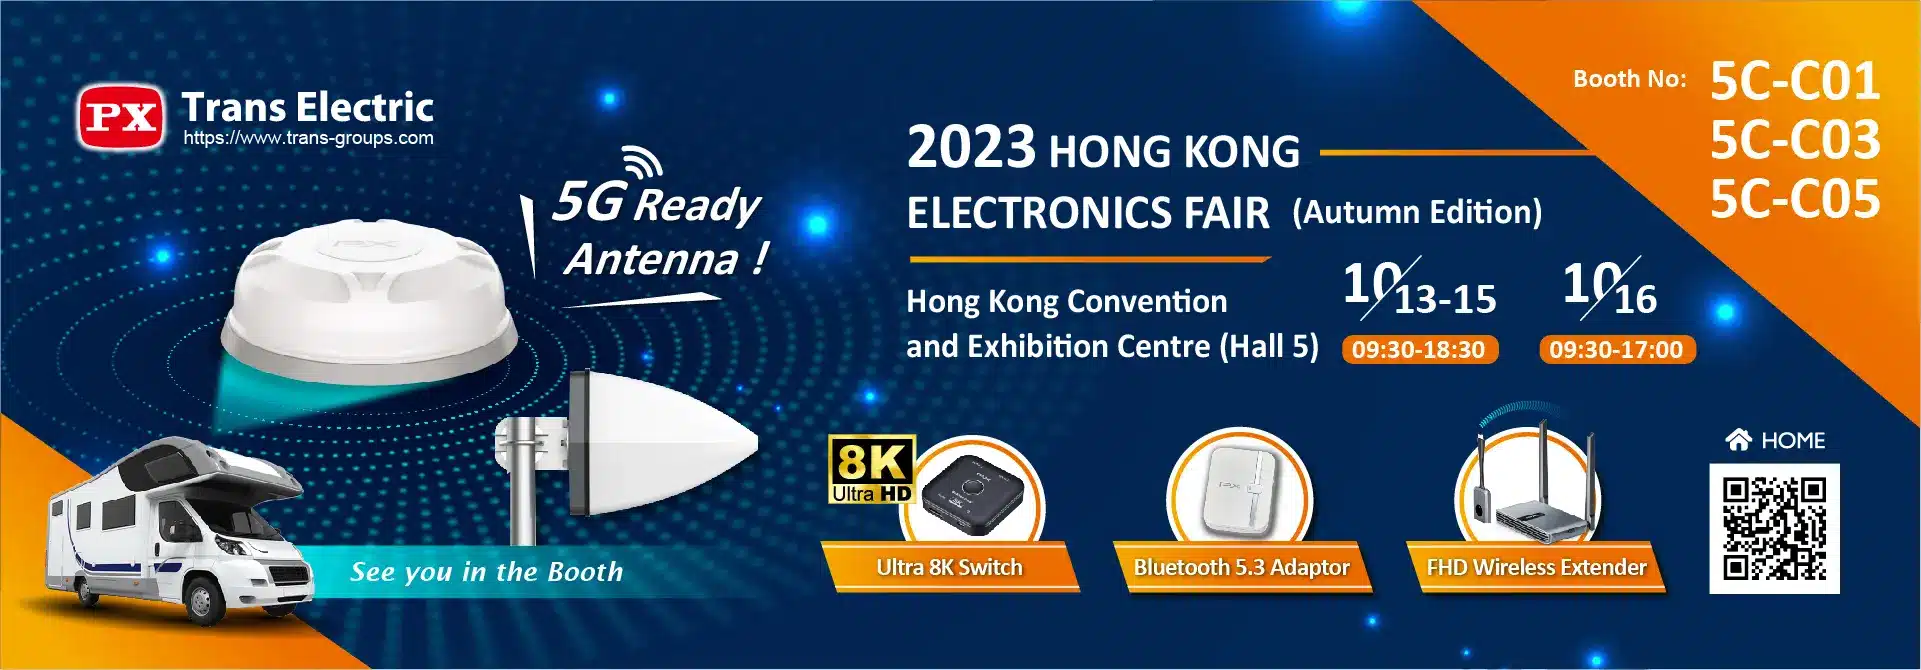 2023 HK electrics fair